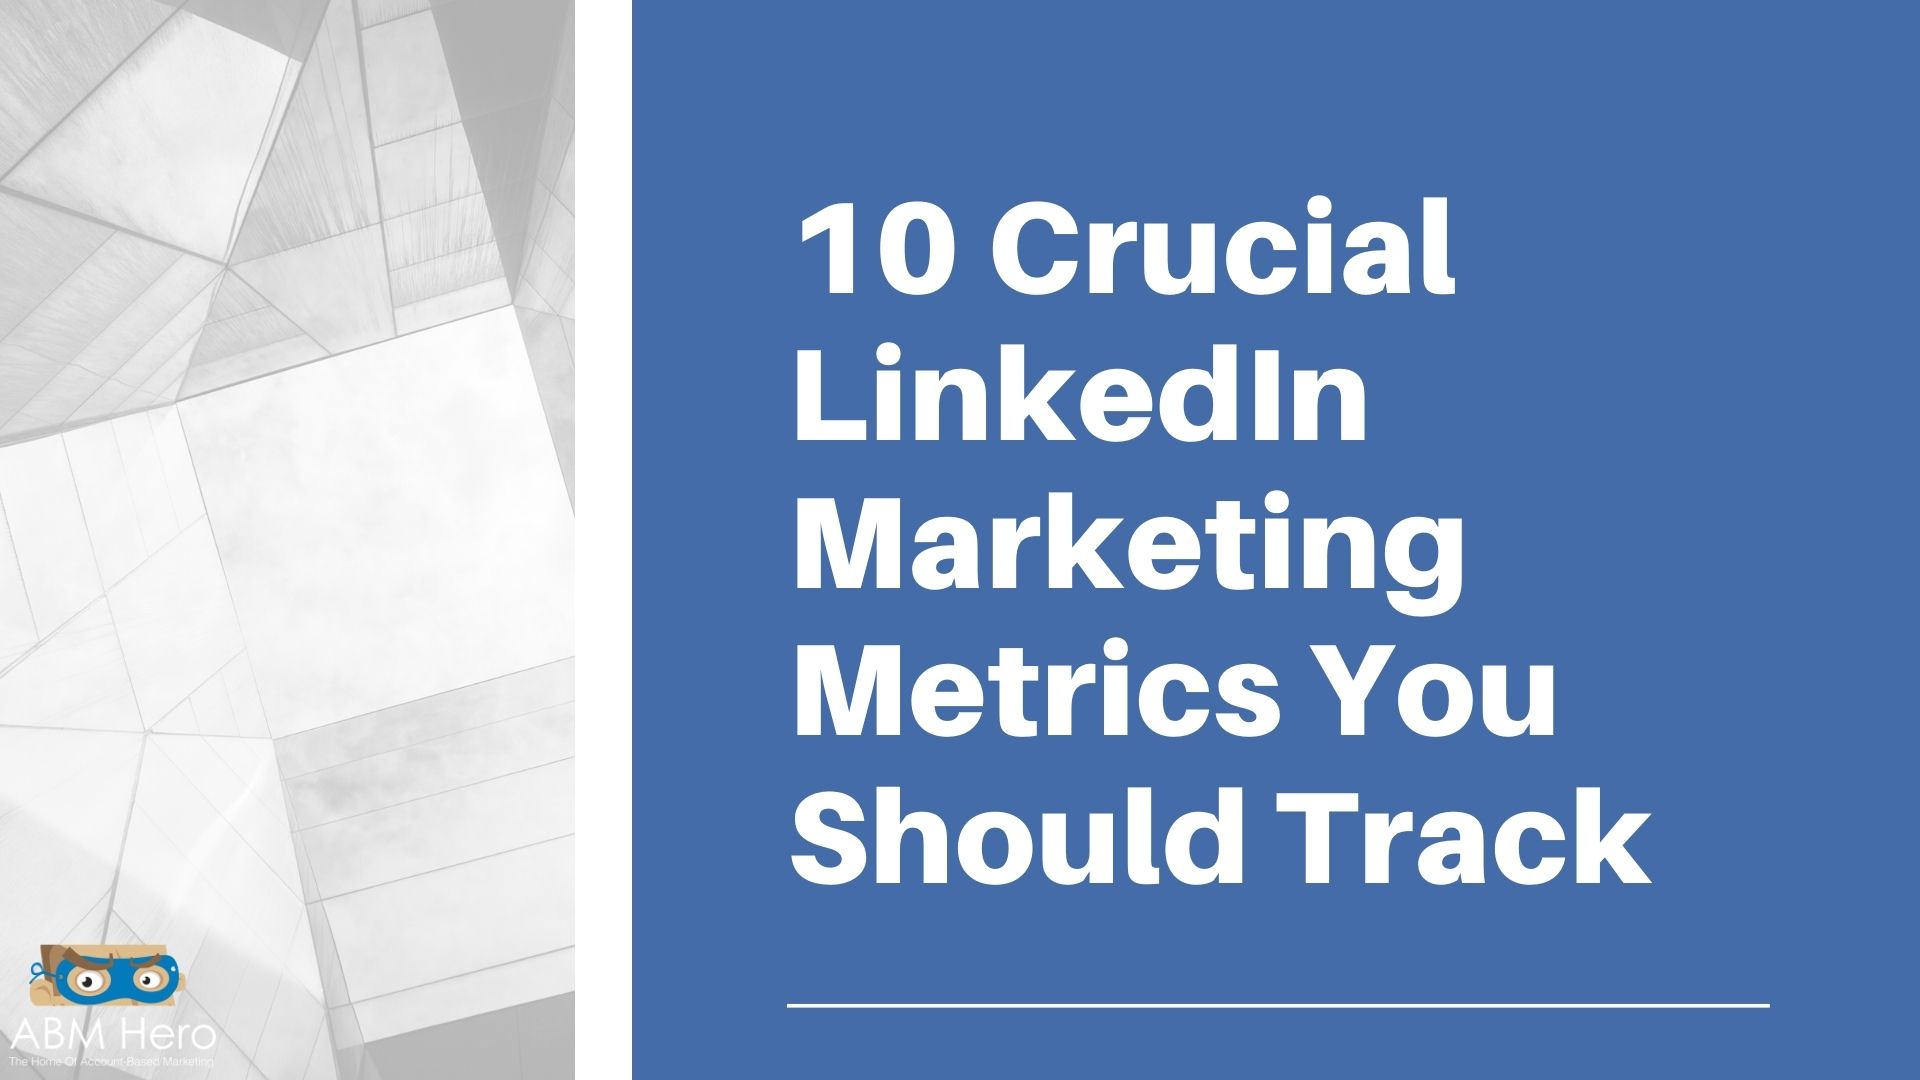 10 Crucial LinkedIn Marketing Metrics You Should Track